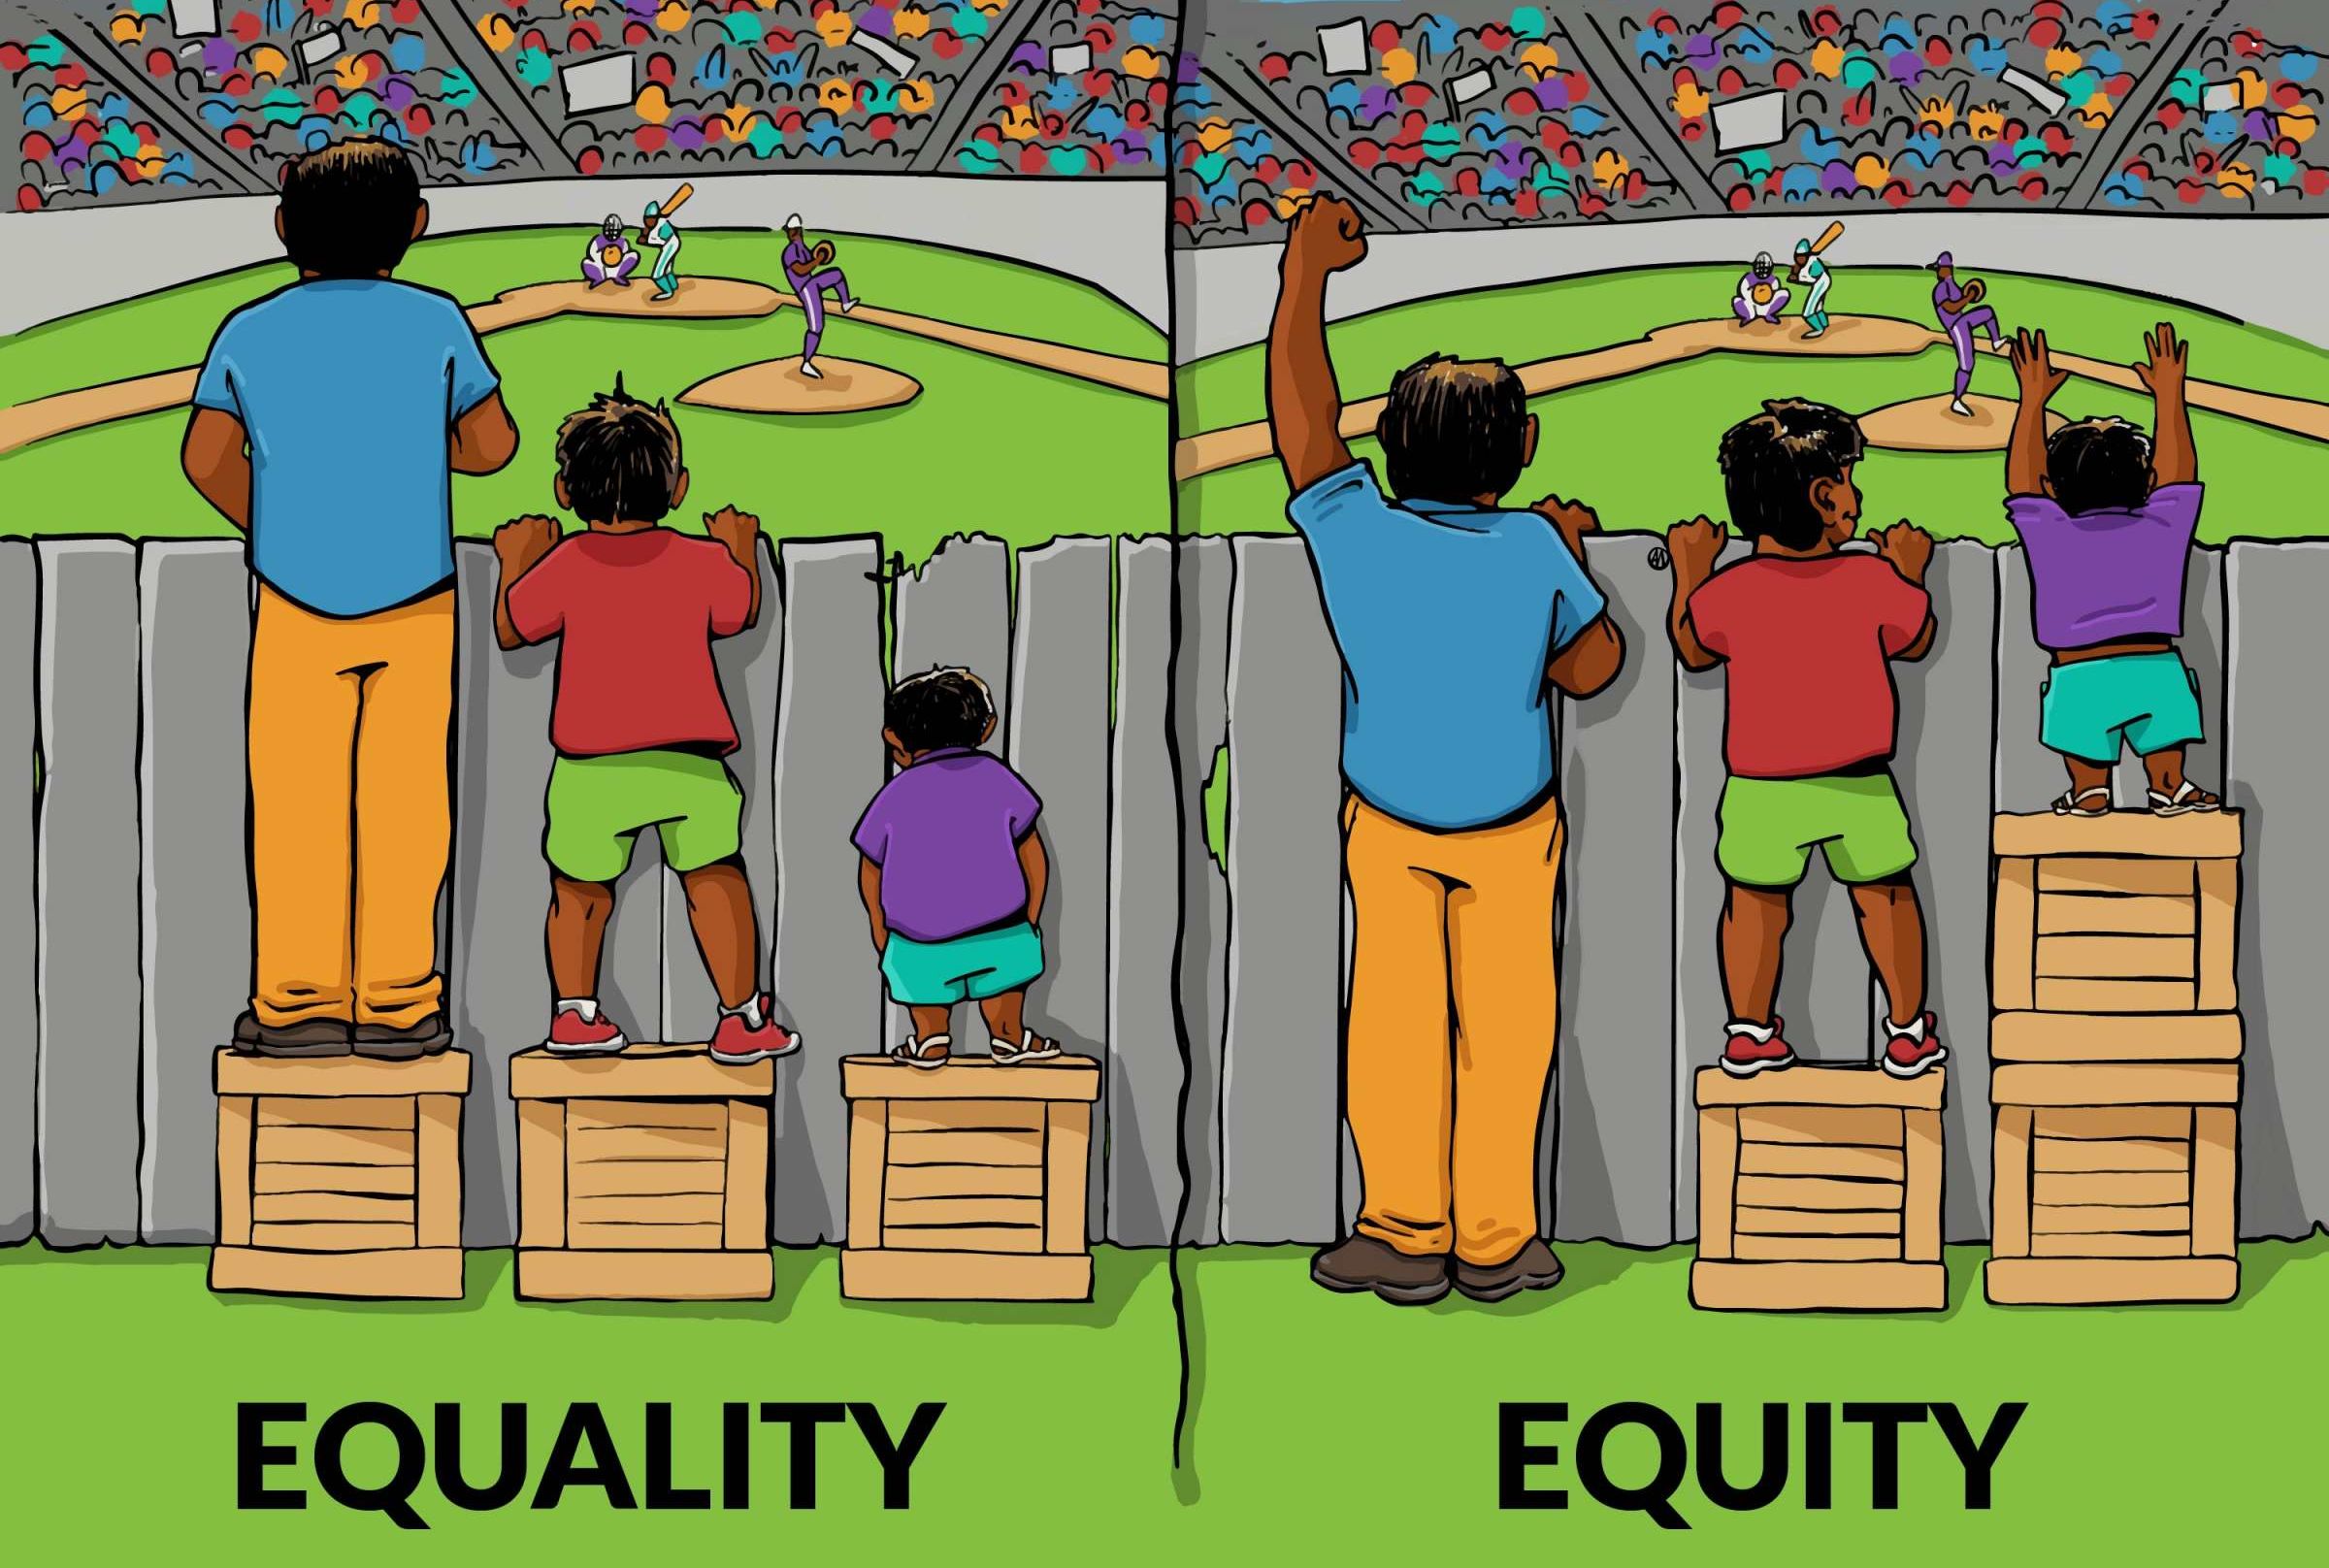 Equality versus equity - fences metaphor